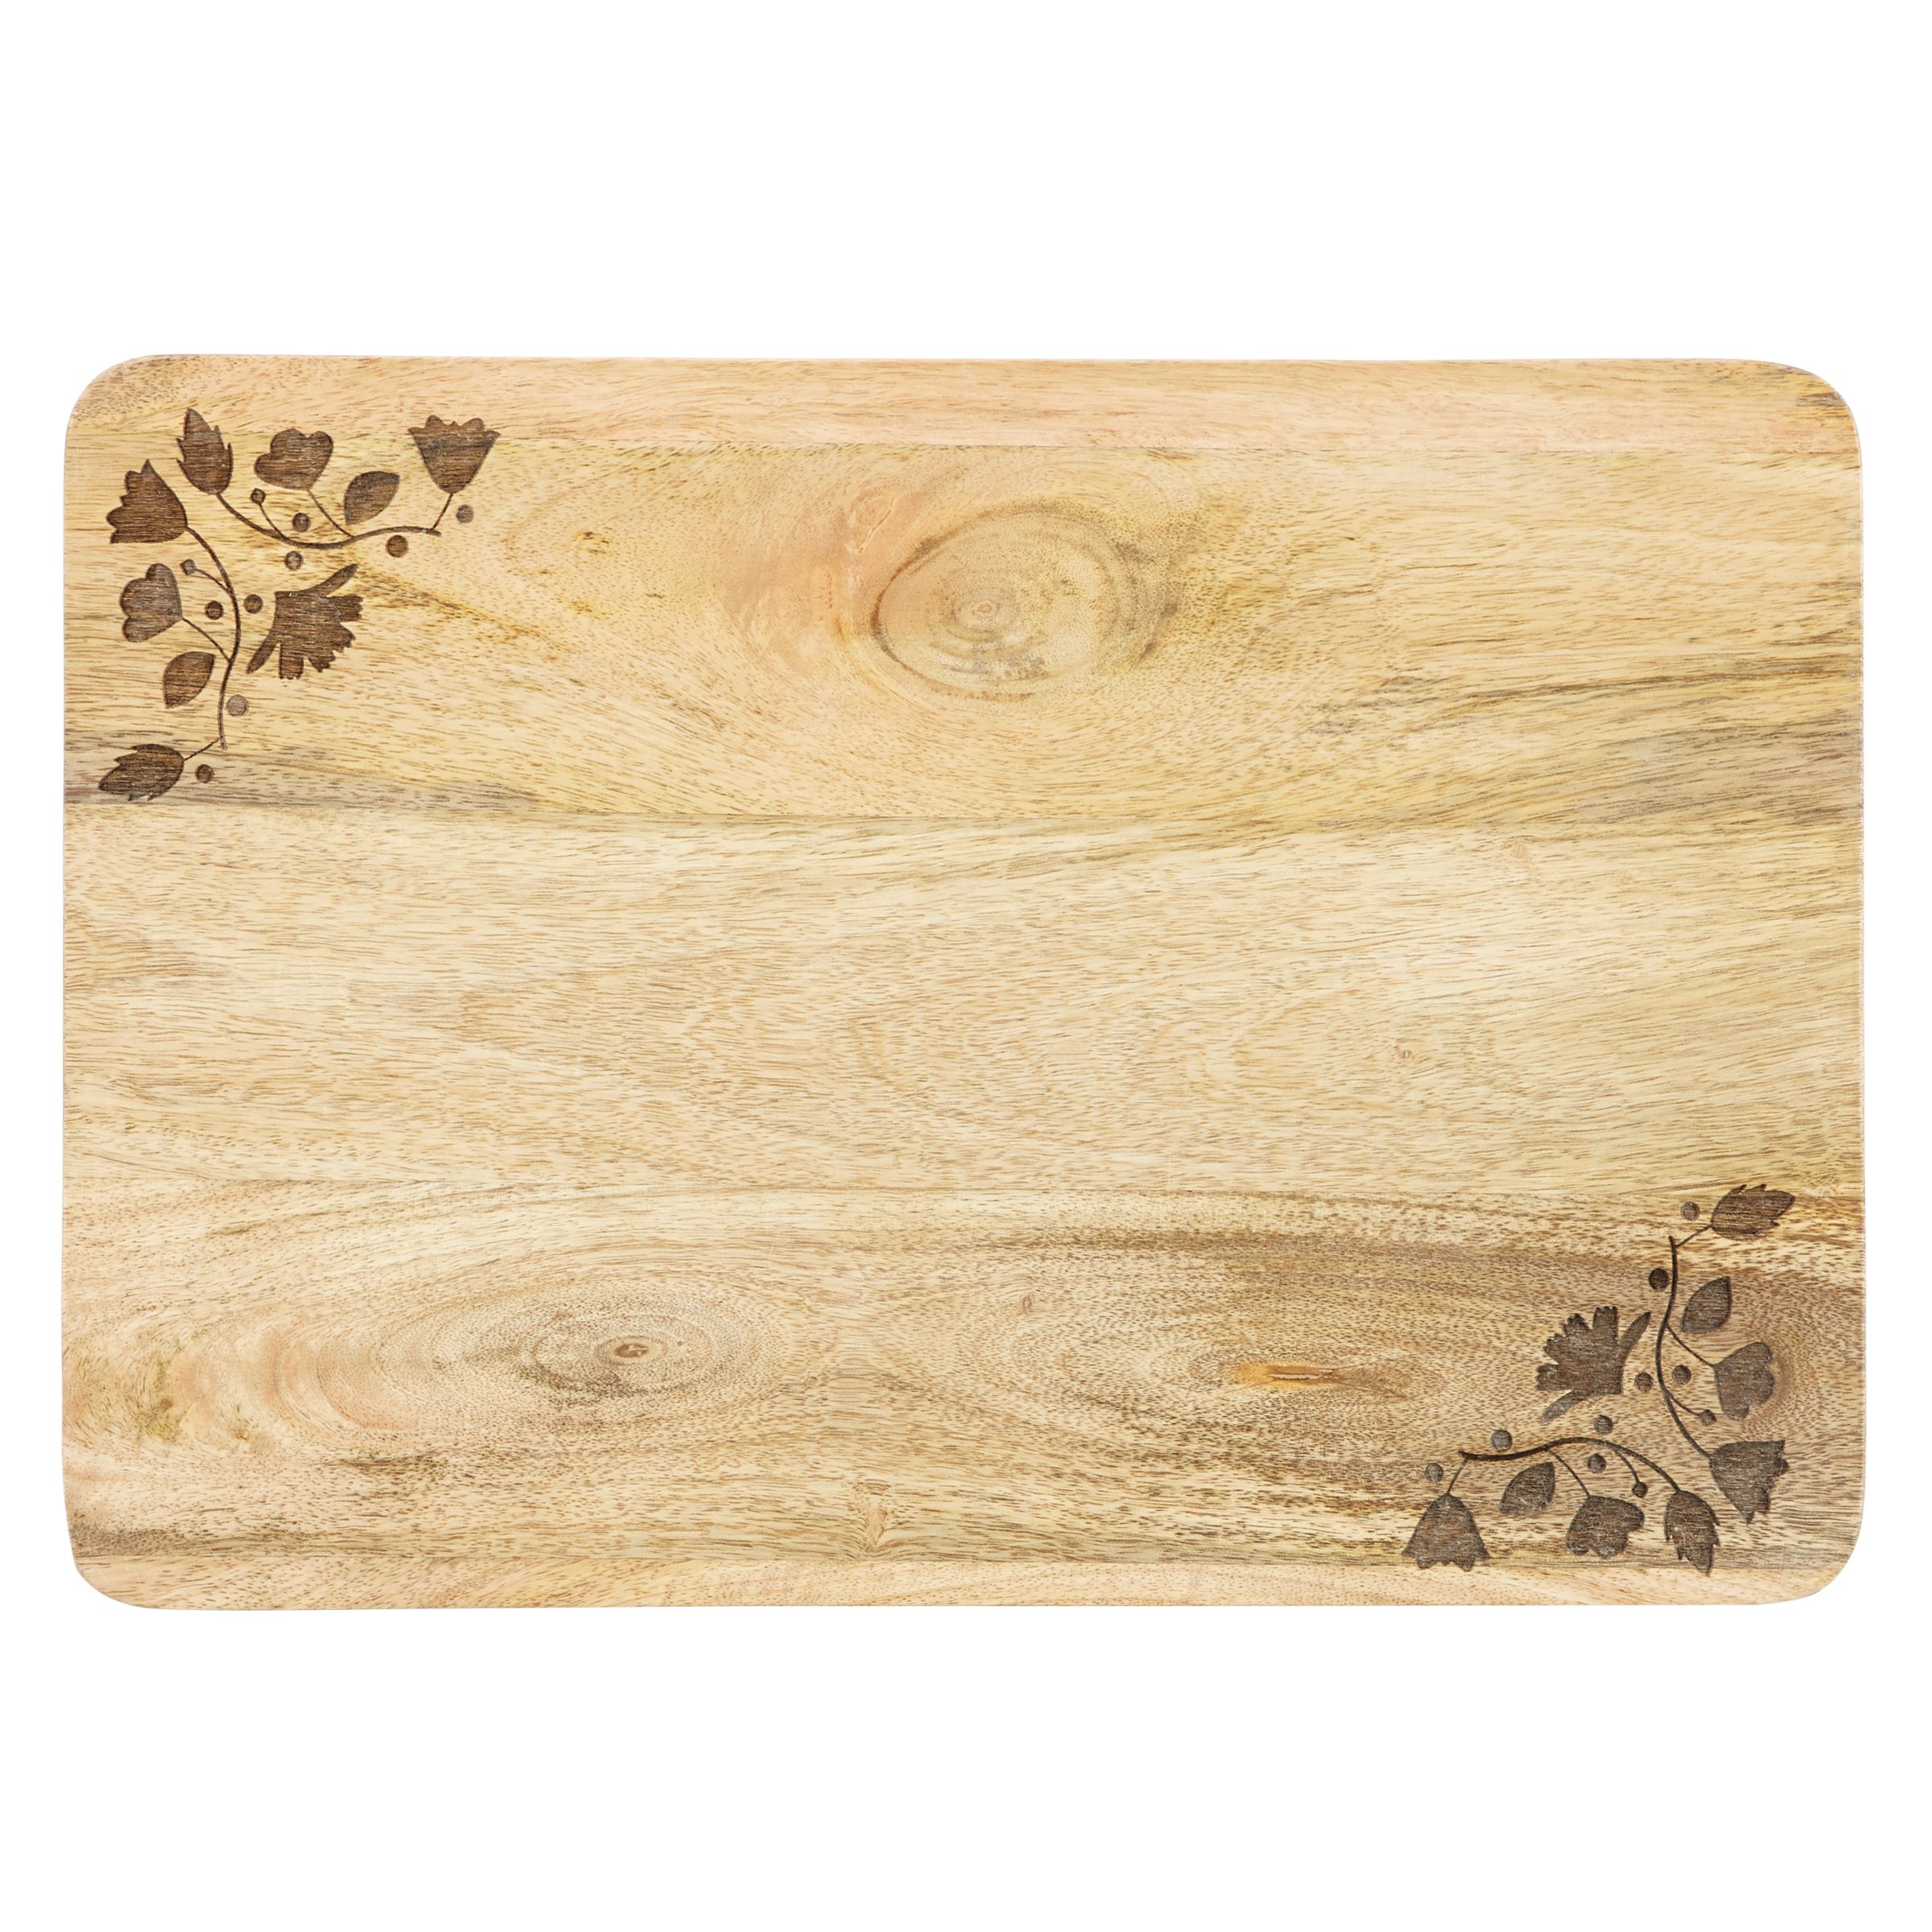 John Lewis mango wood chopping board, £15